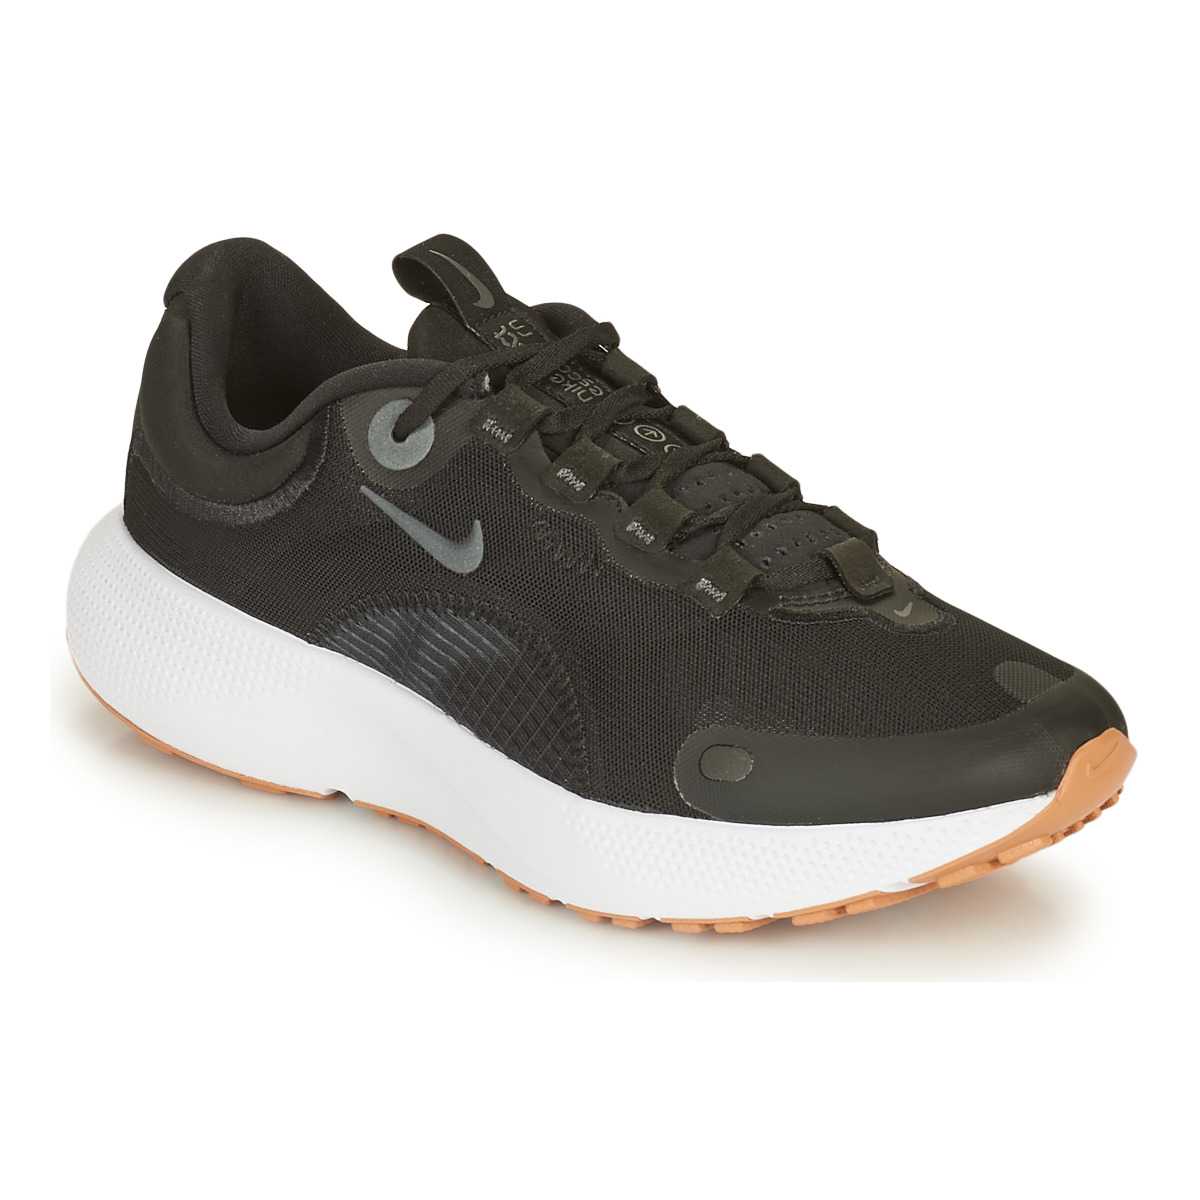 Chaussures de running Nike NIKE ESCAPE RUN 19008355 1200 A